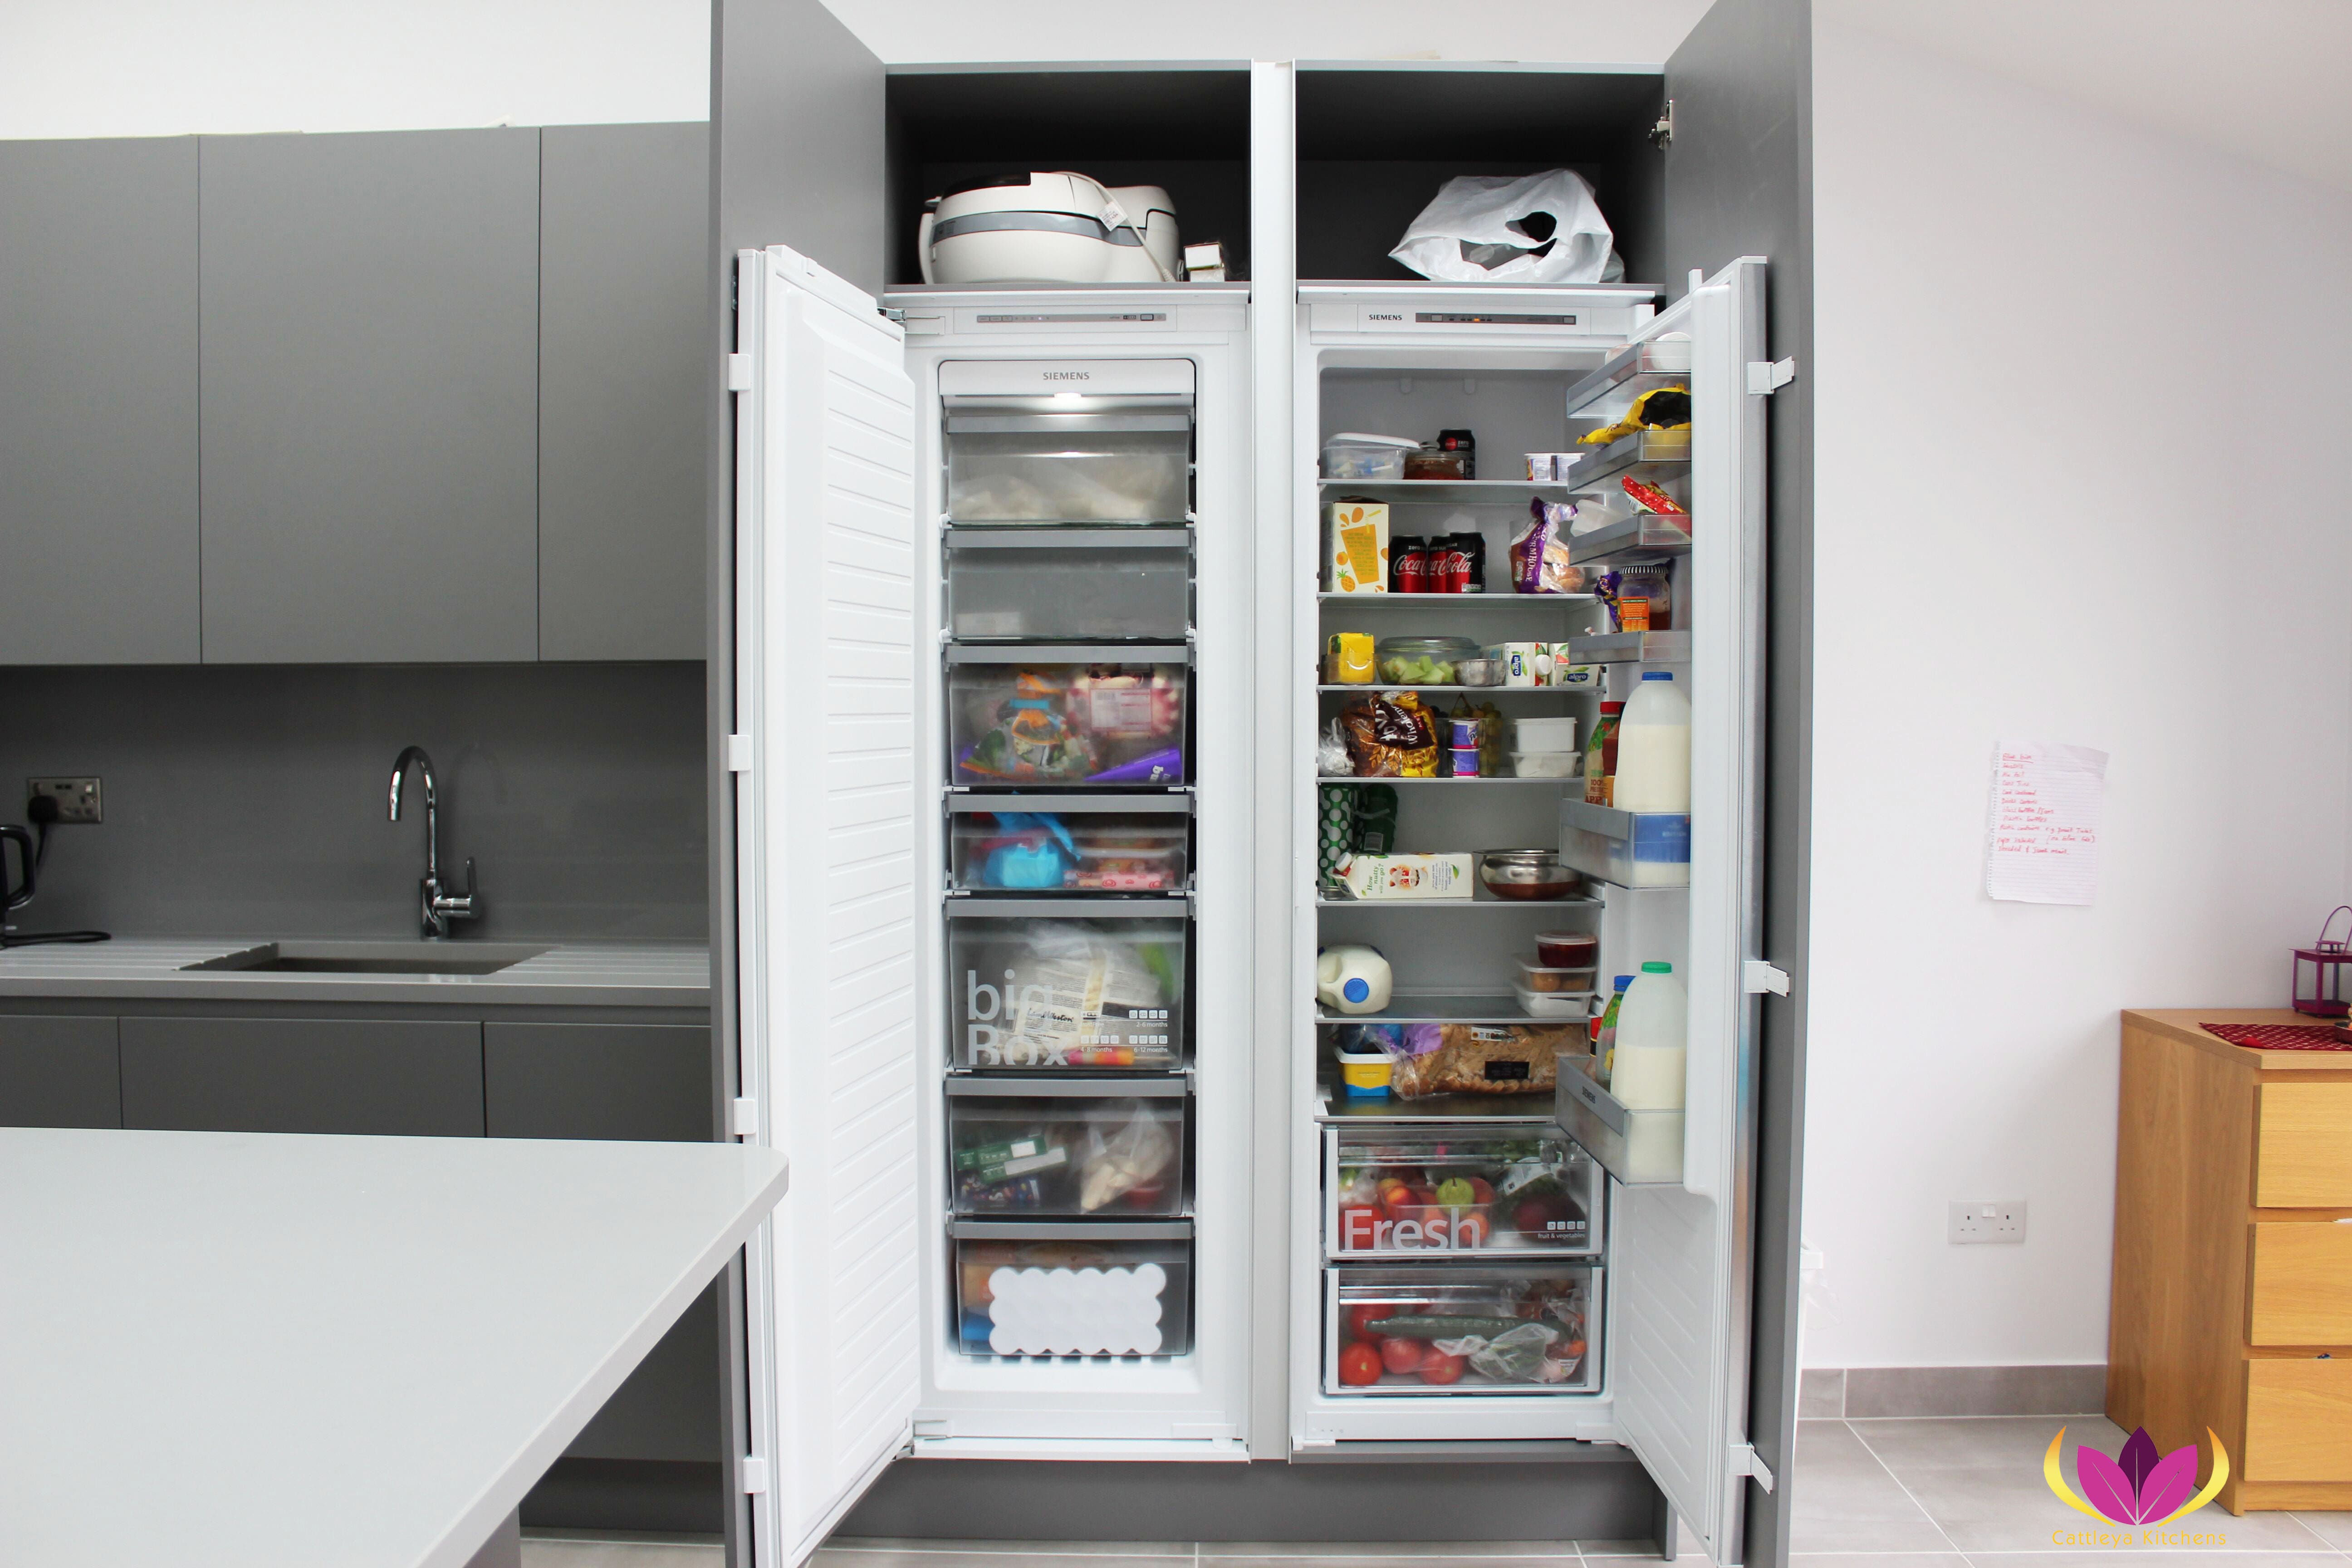 Refrigerator hidden inside a cabinet Edgware Finished Kitchen Project